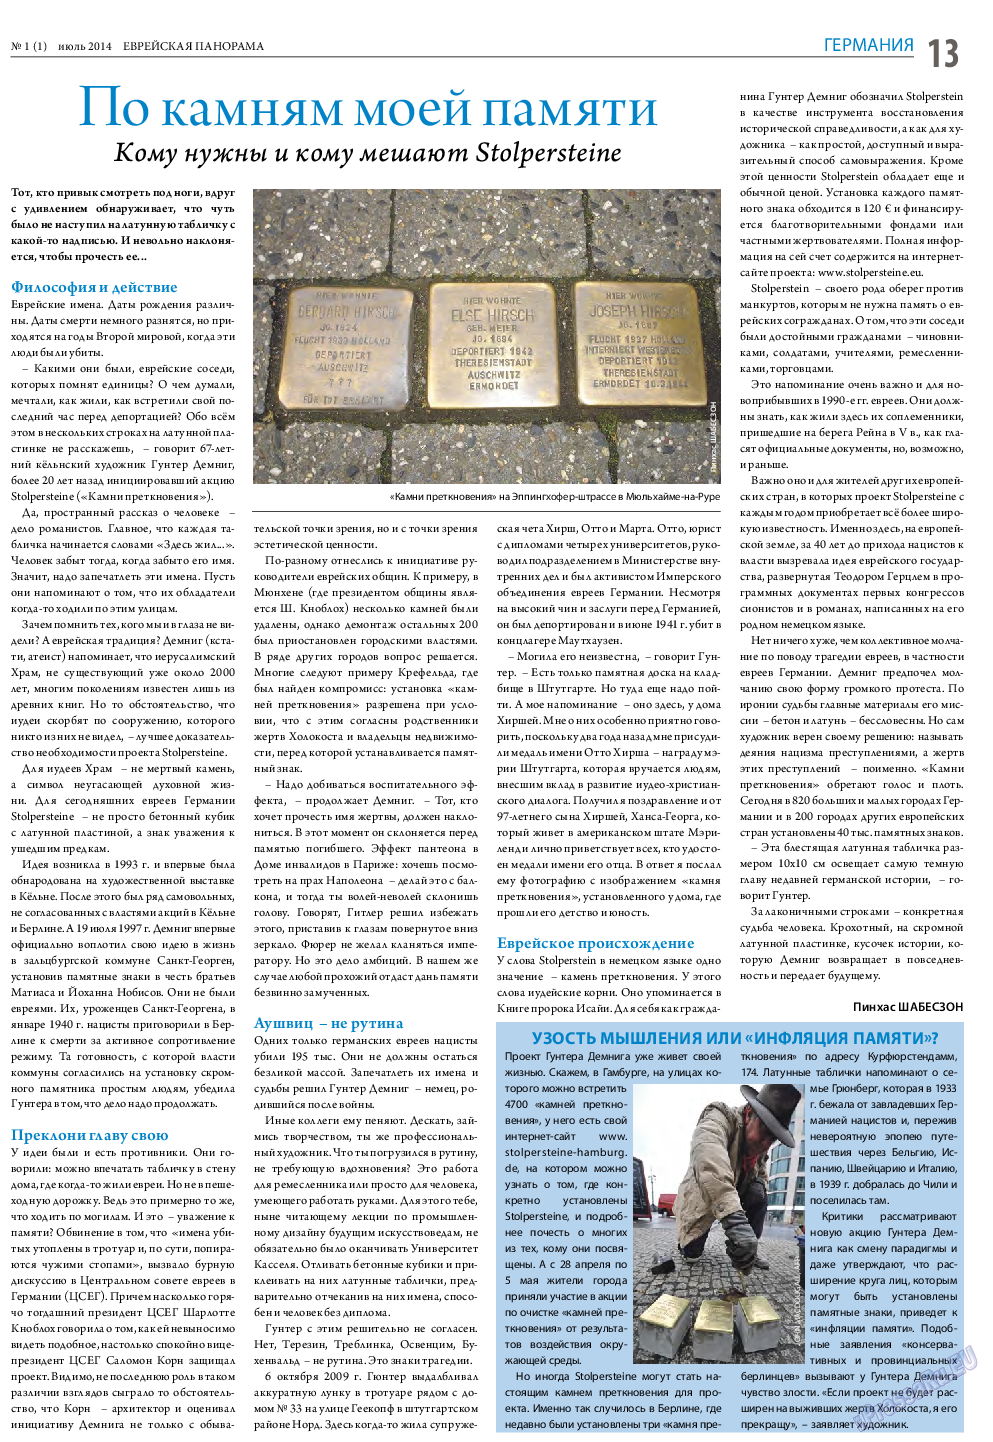 Еврейская панорама, газета. 2014 №1 стр.13